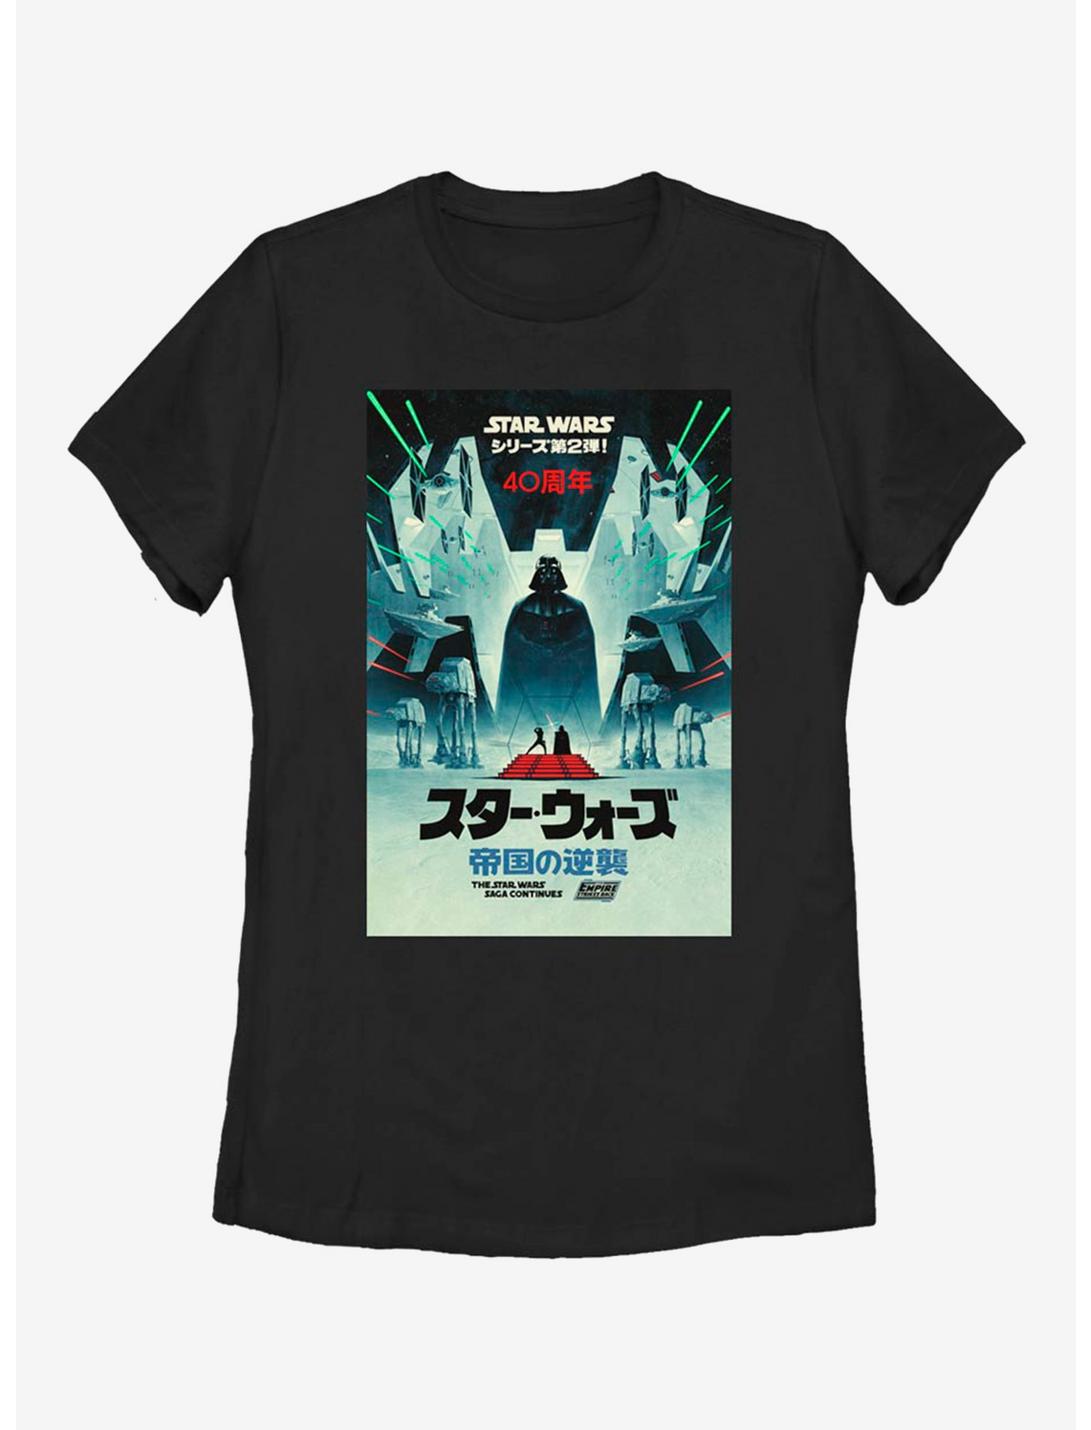 Star Wars Episode V: The Empire Strikes Back 40th Anniversary Japanese Poster Womens T-Shirt, BLACK, hi-res